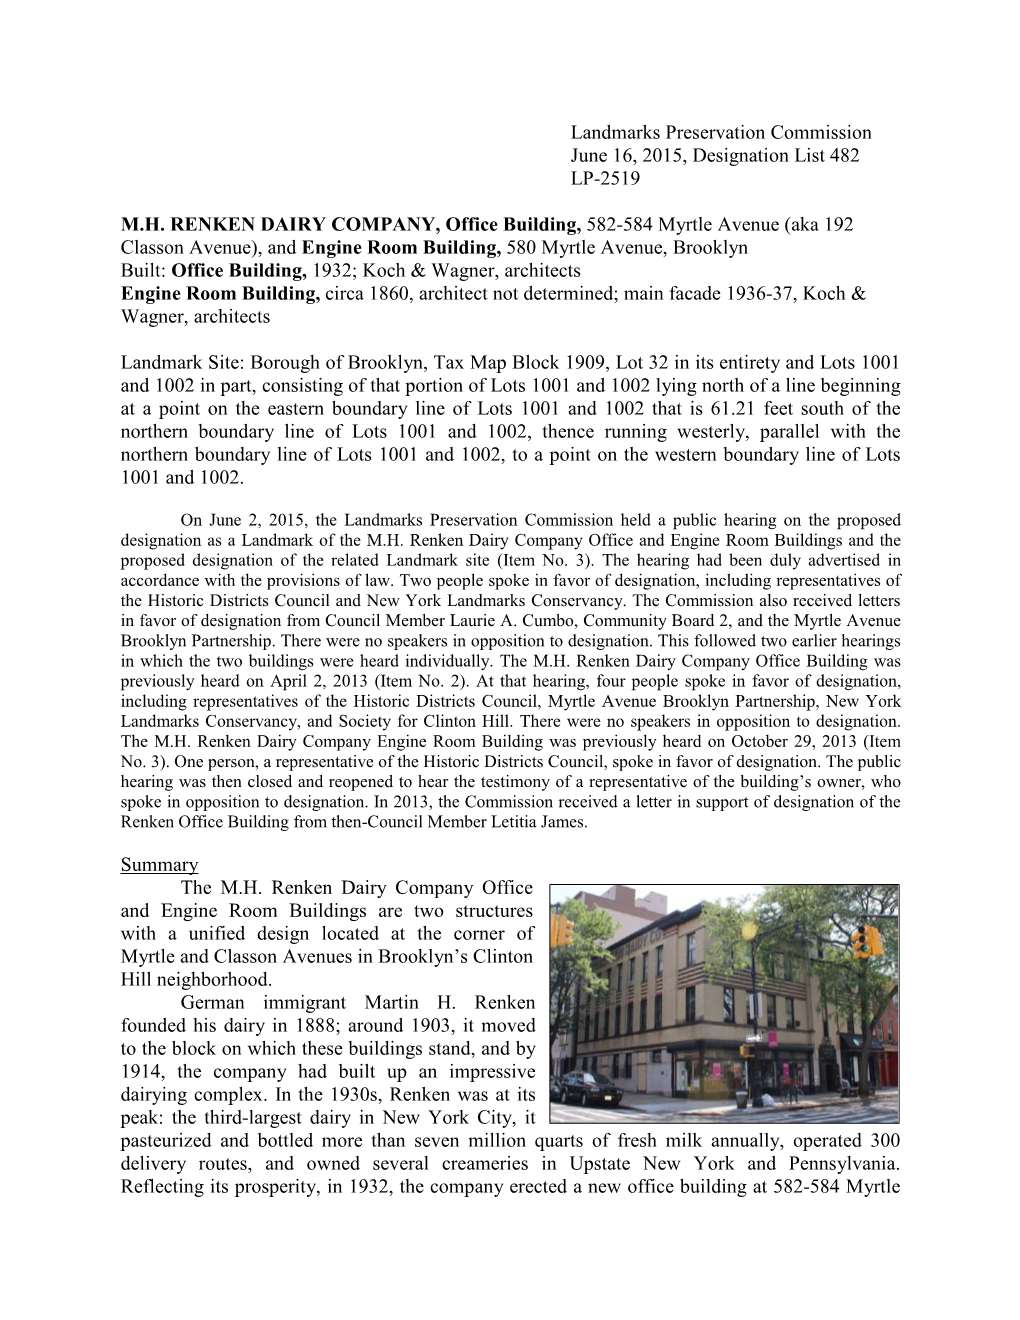 Landmarks Preservation Commission June 16, 2015, Designation List 482 LP-2519